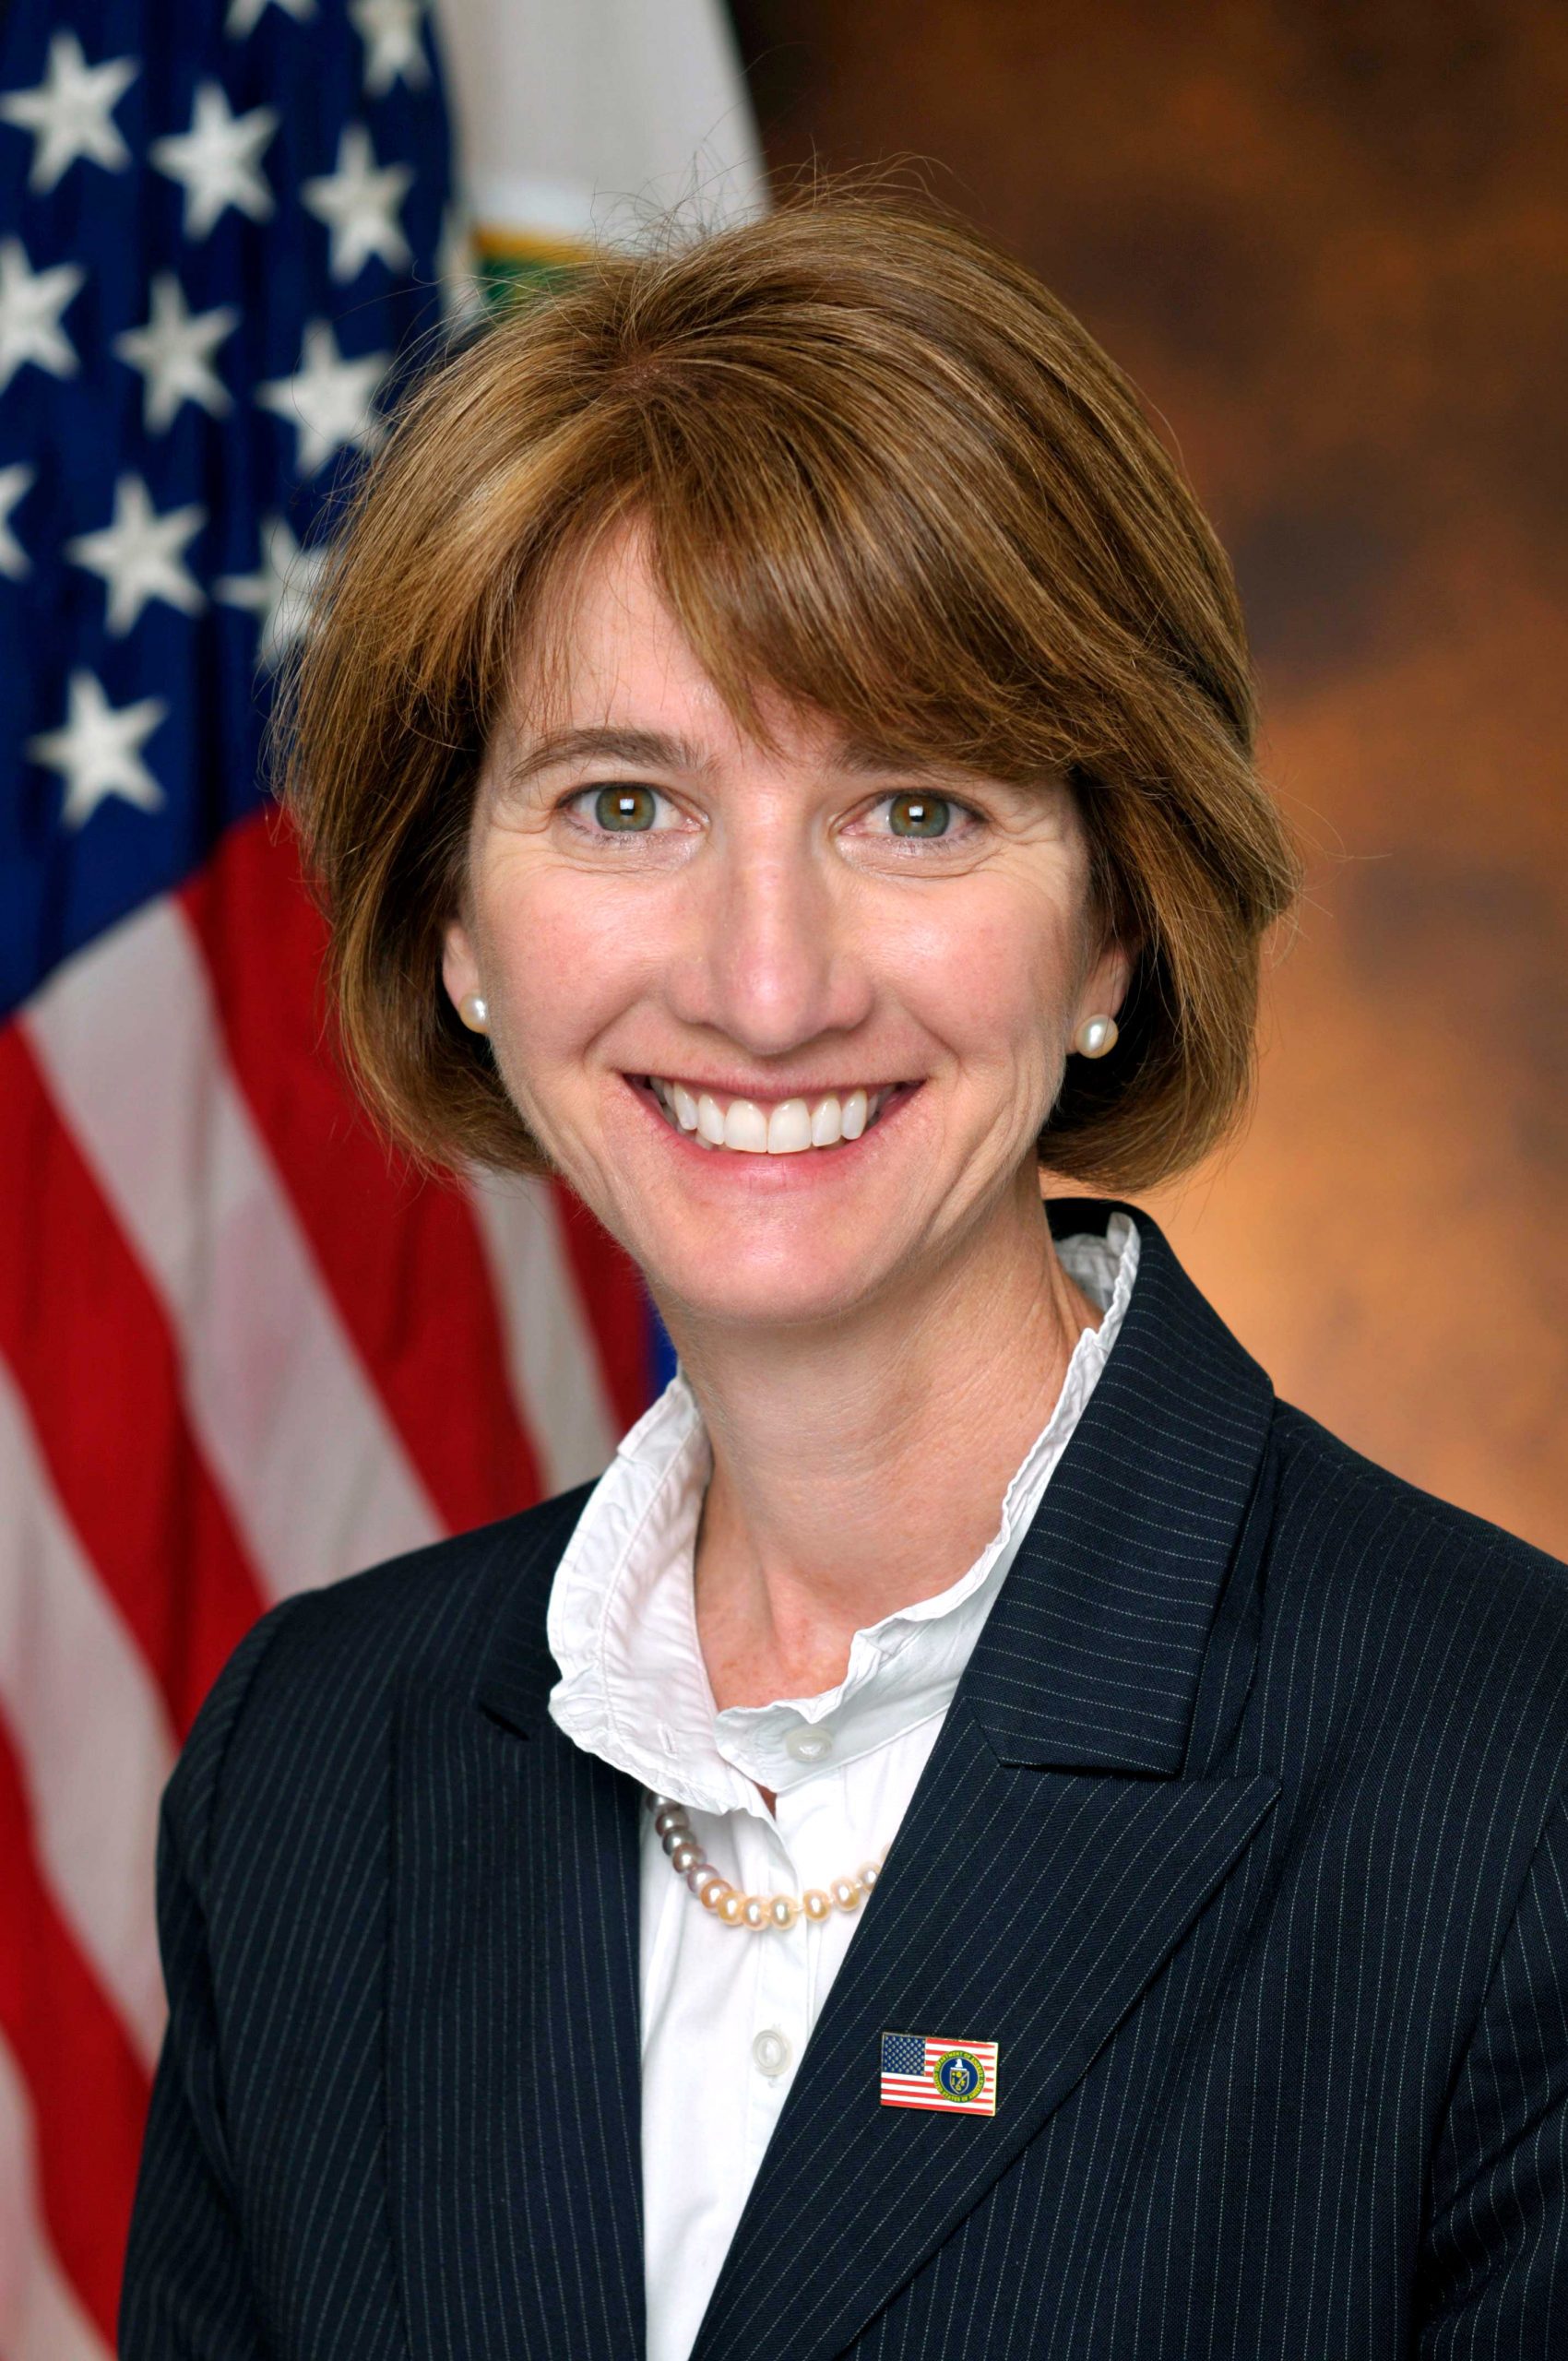 Kristina M. Johnson the President of the Ohio State University